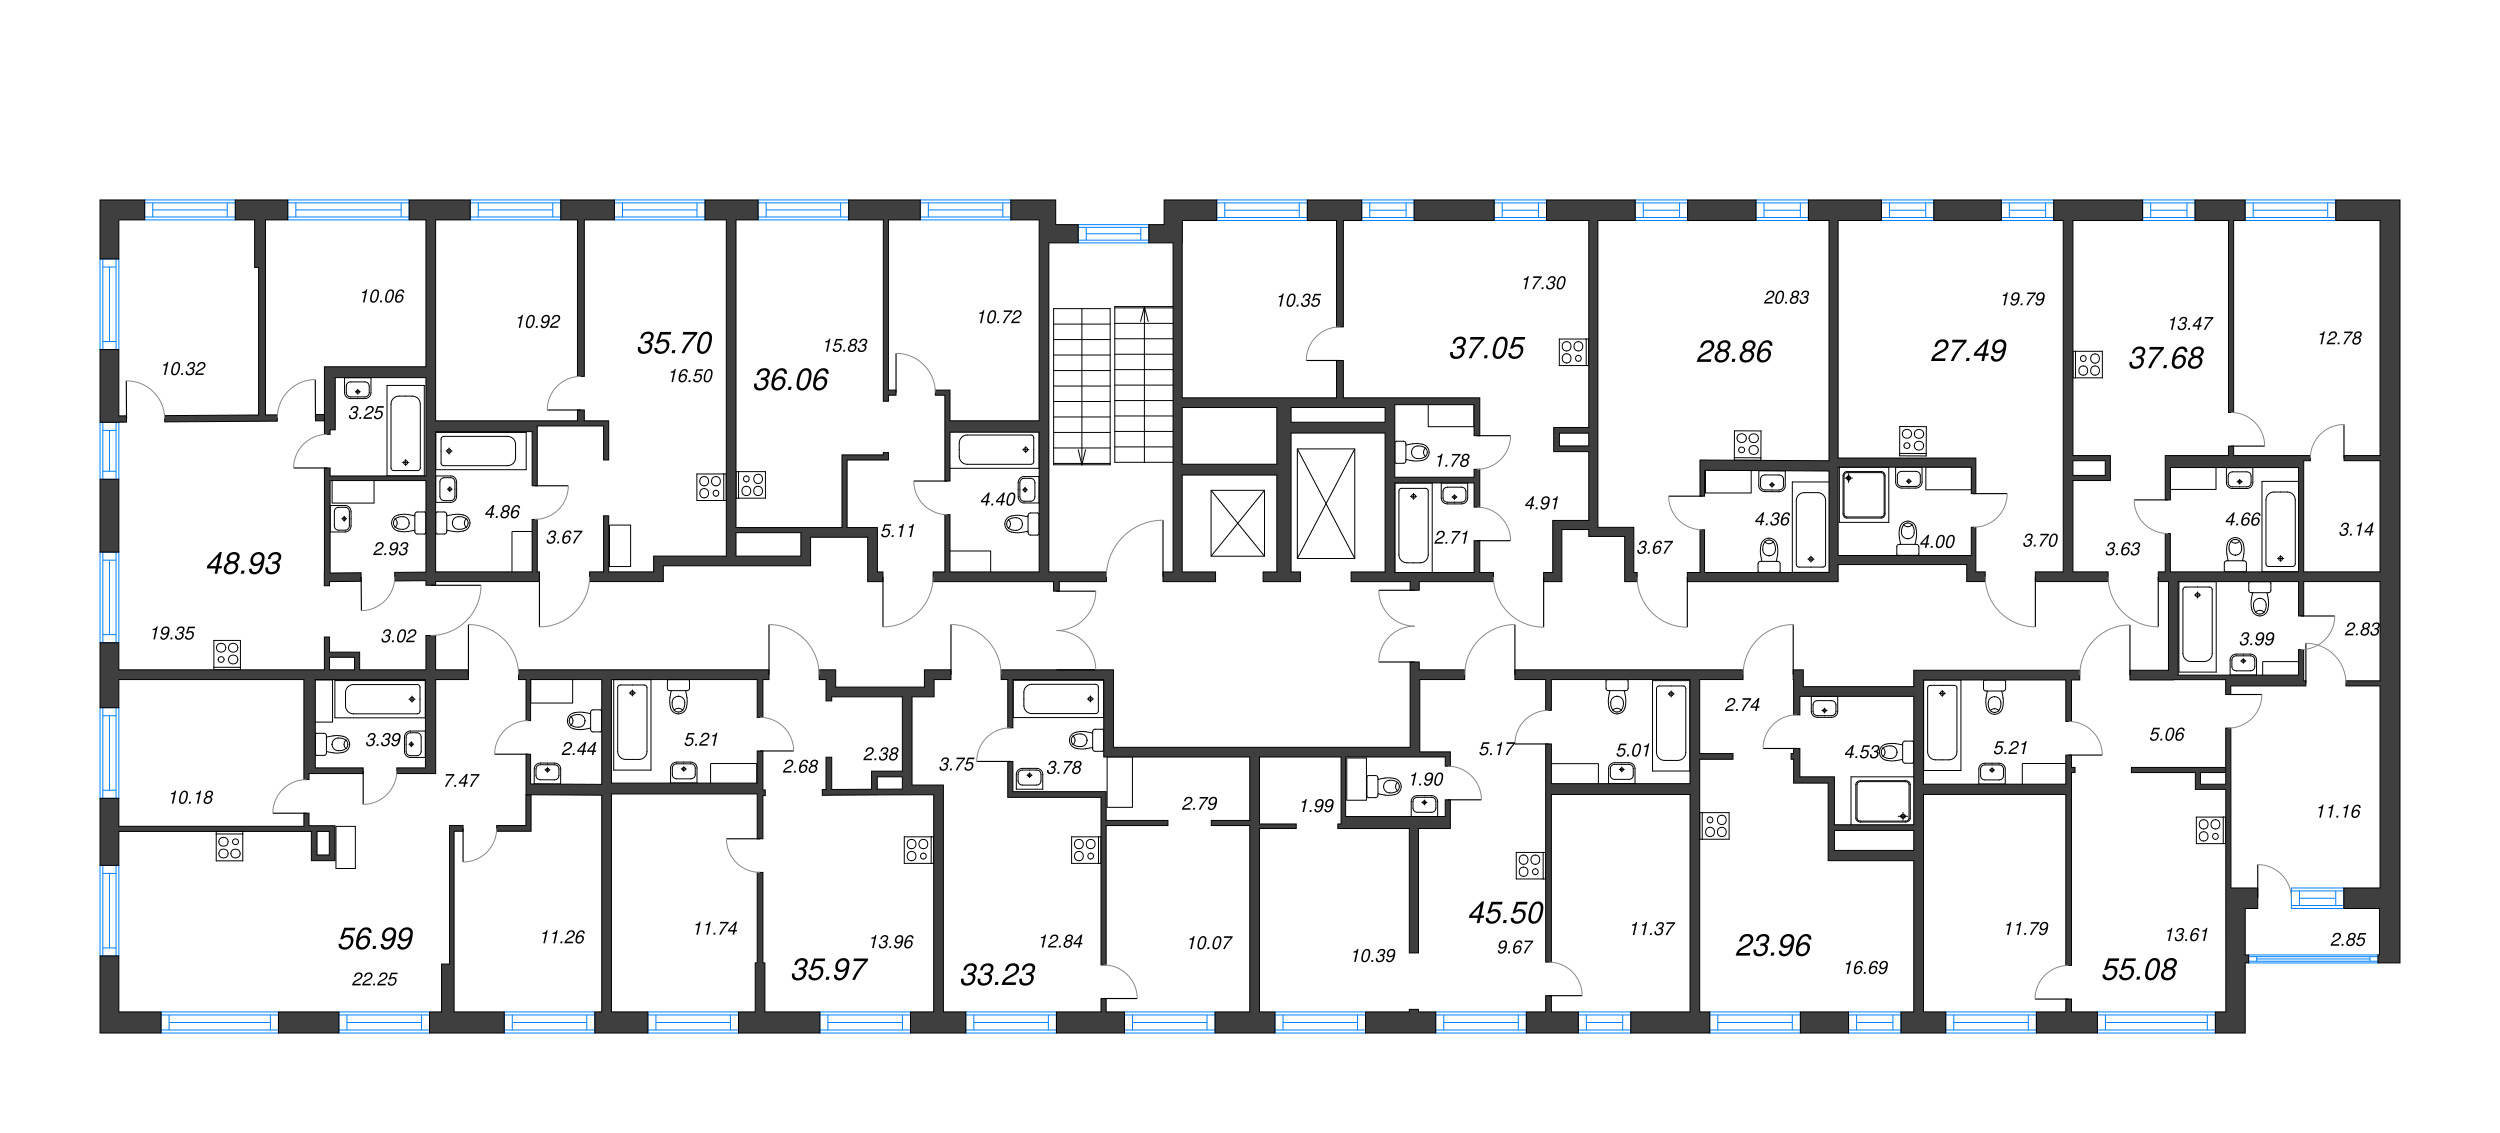 2-комнатная (Евро) квартира, 36.06 м² - планировка этажа